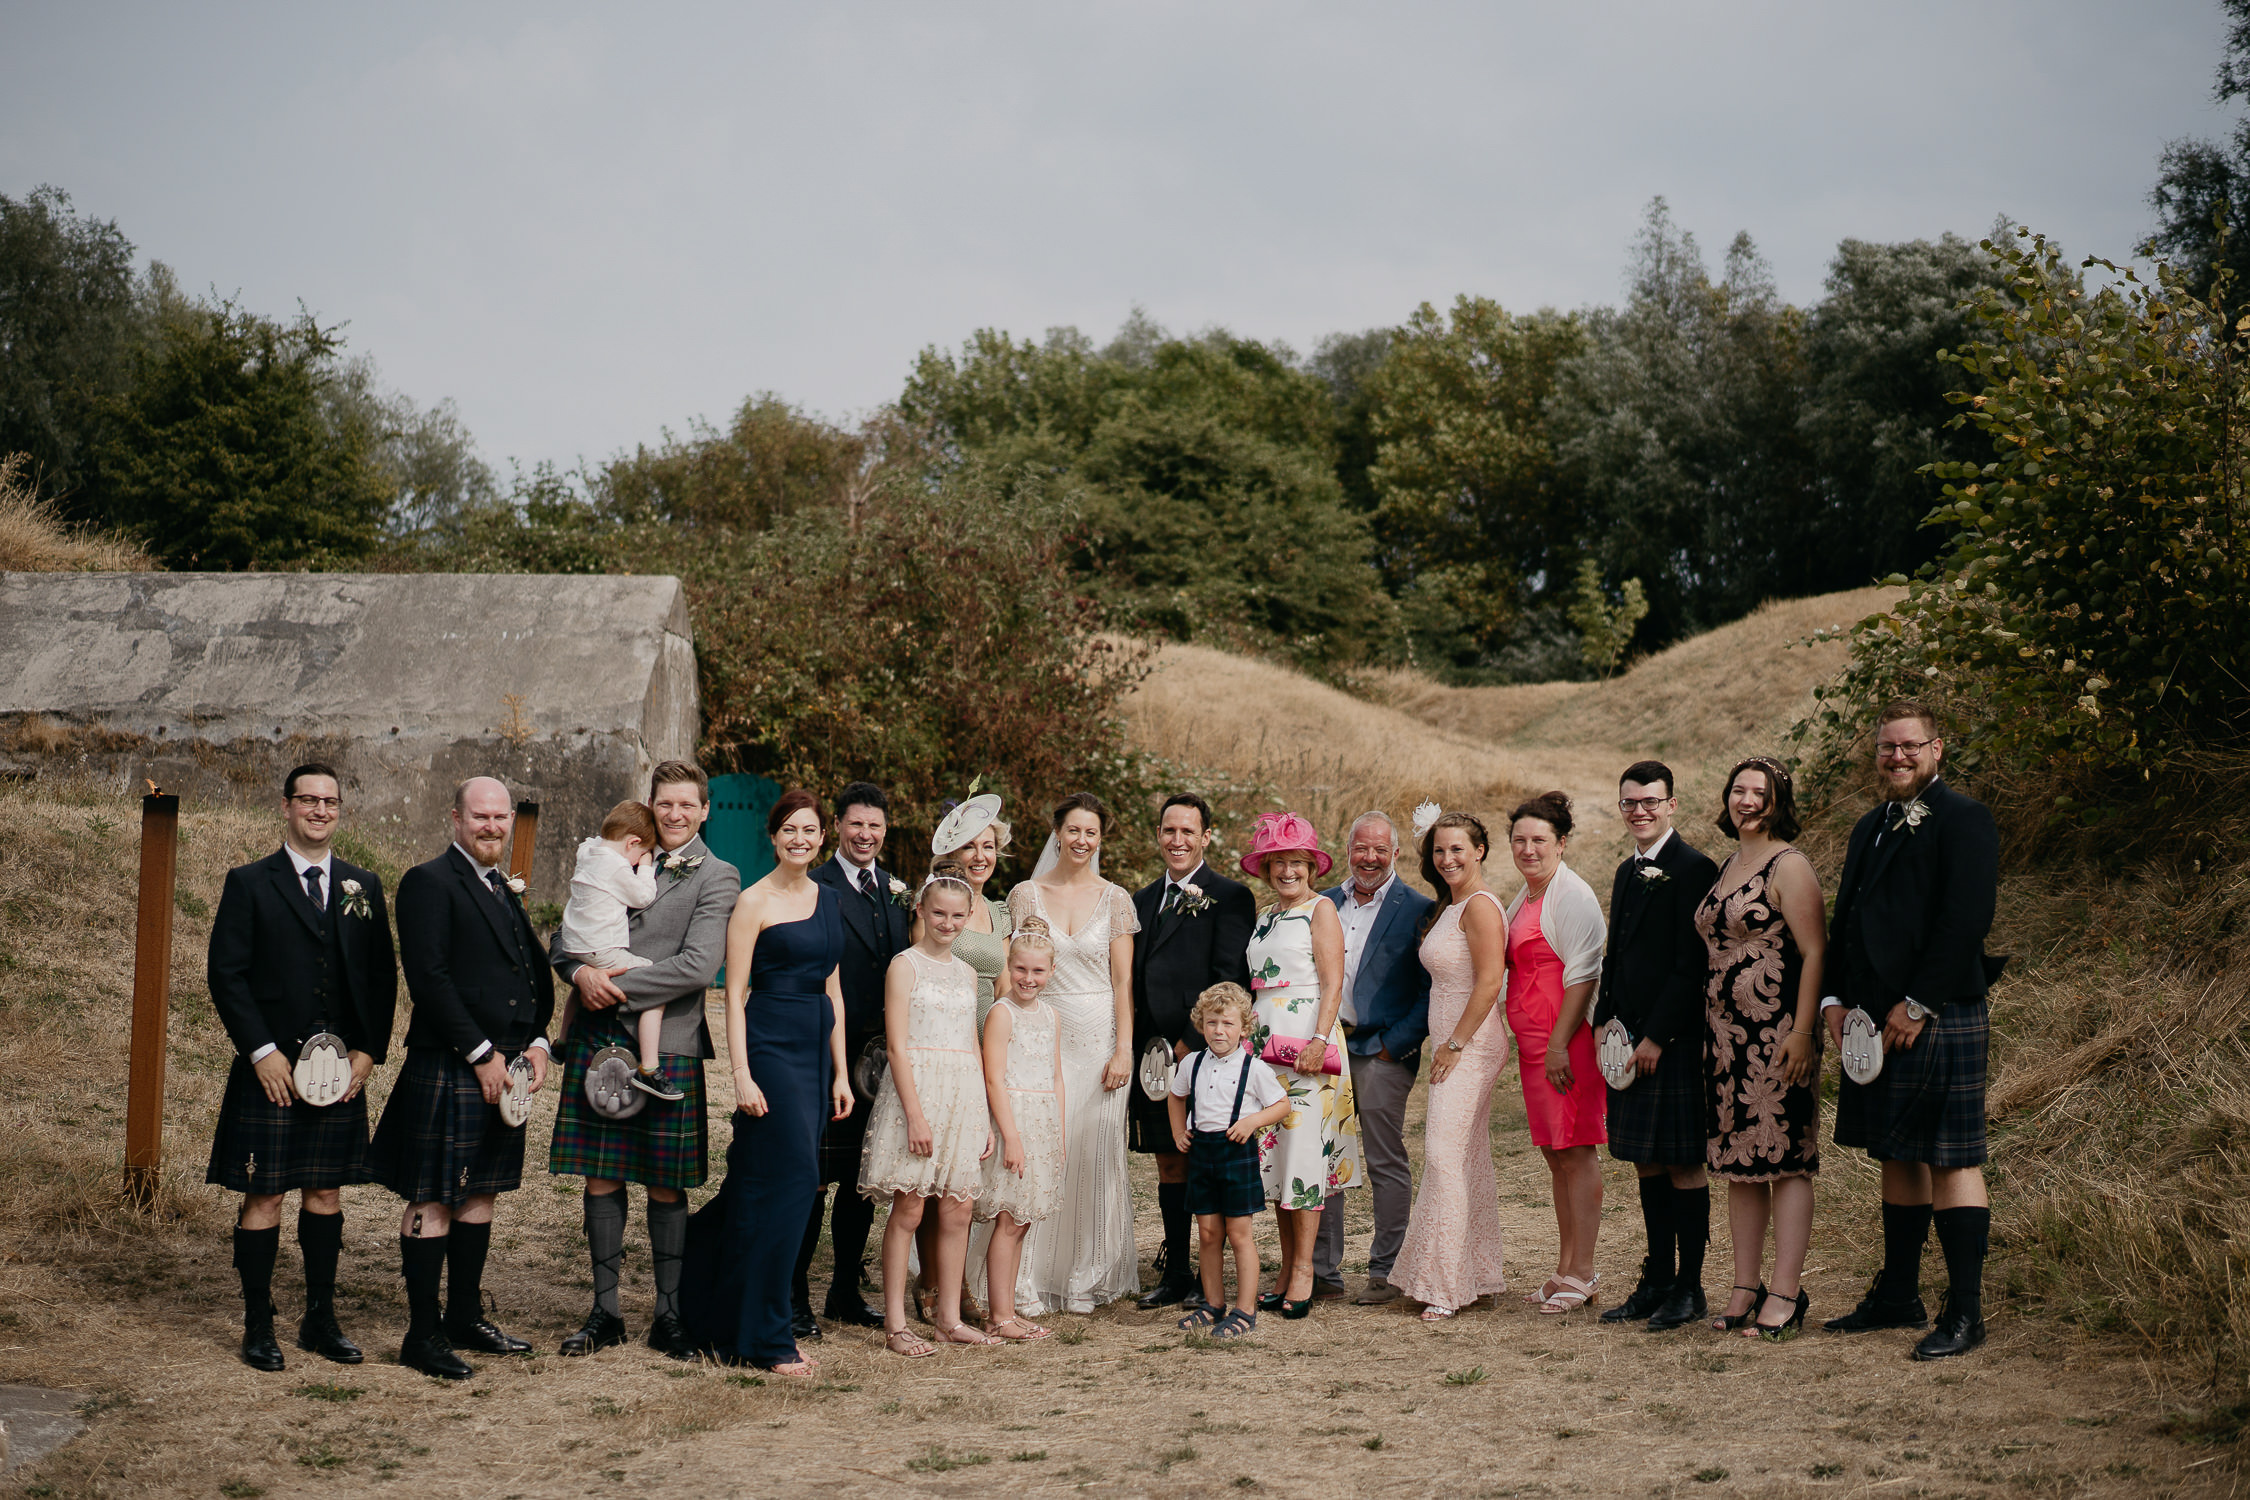 Wedding family portrait photoshoot by destination wedding photographer mark hadden